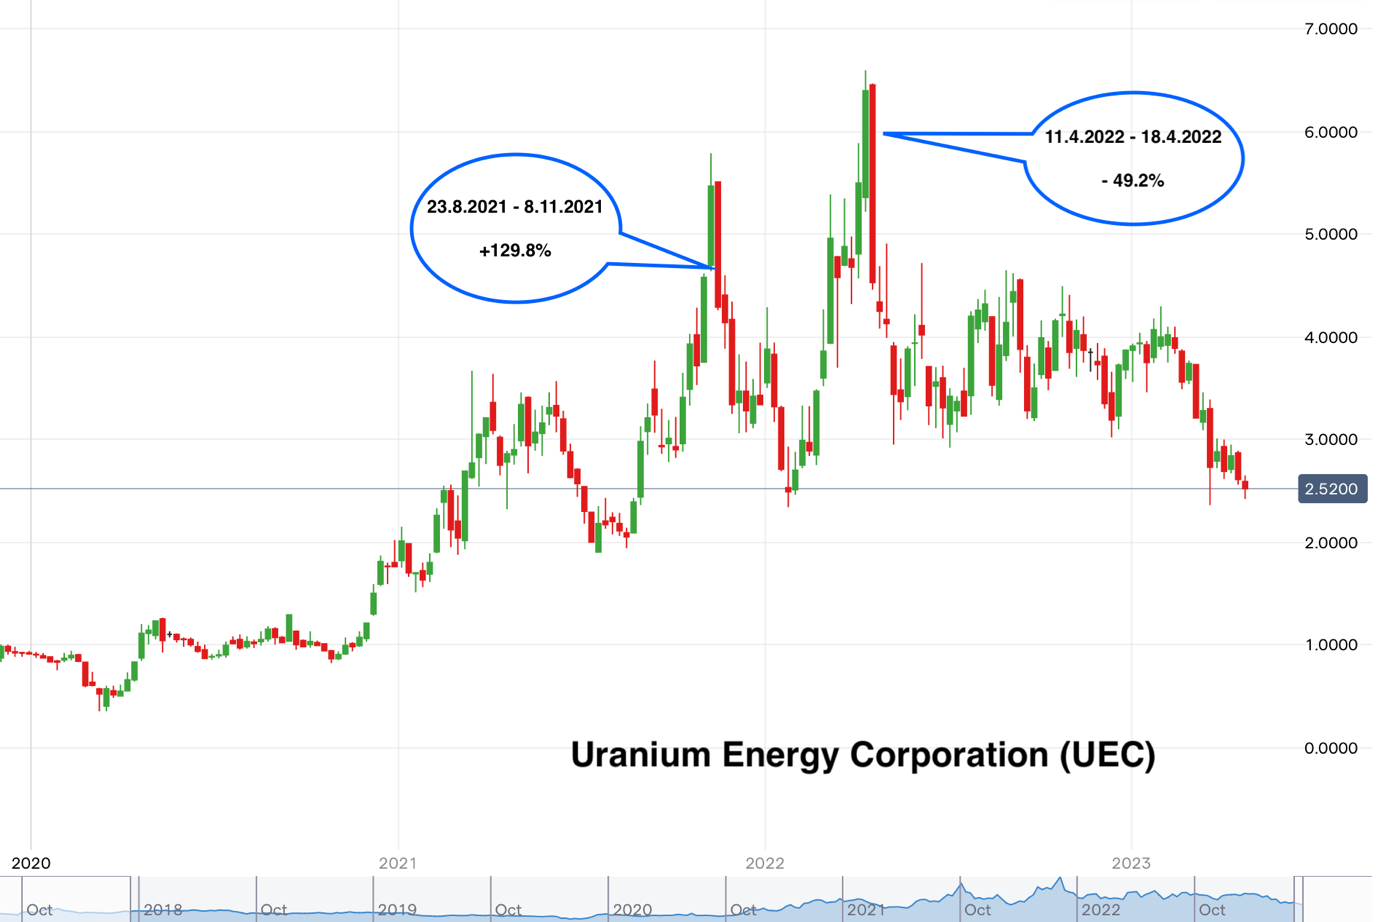 Uranium Energy Corp (UEC) Stock Forecast for 2023